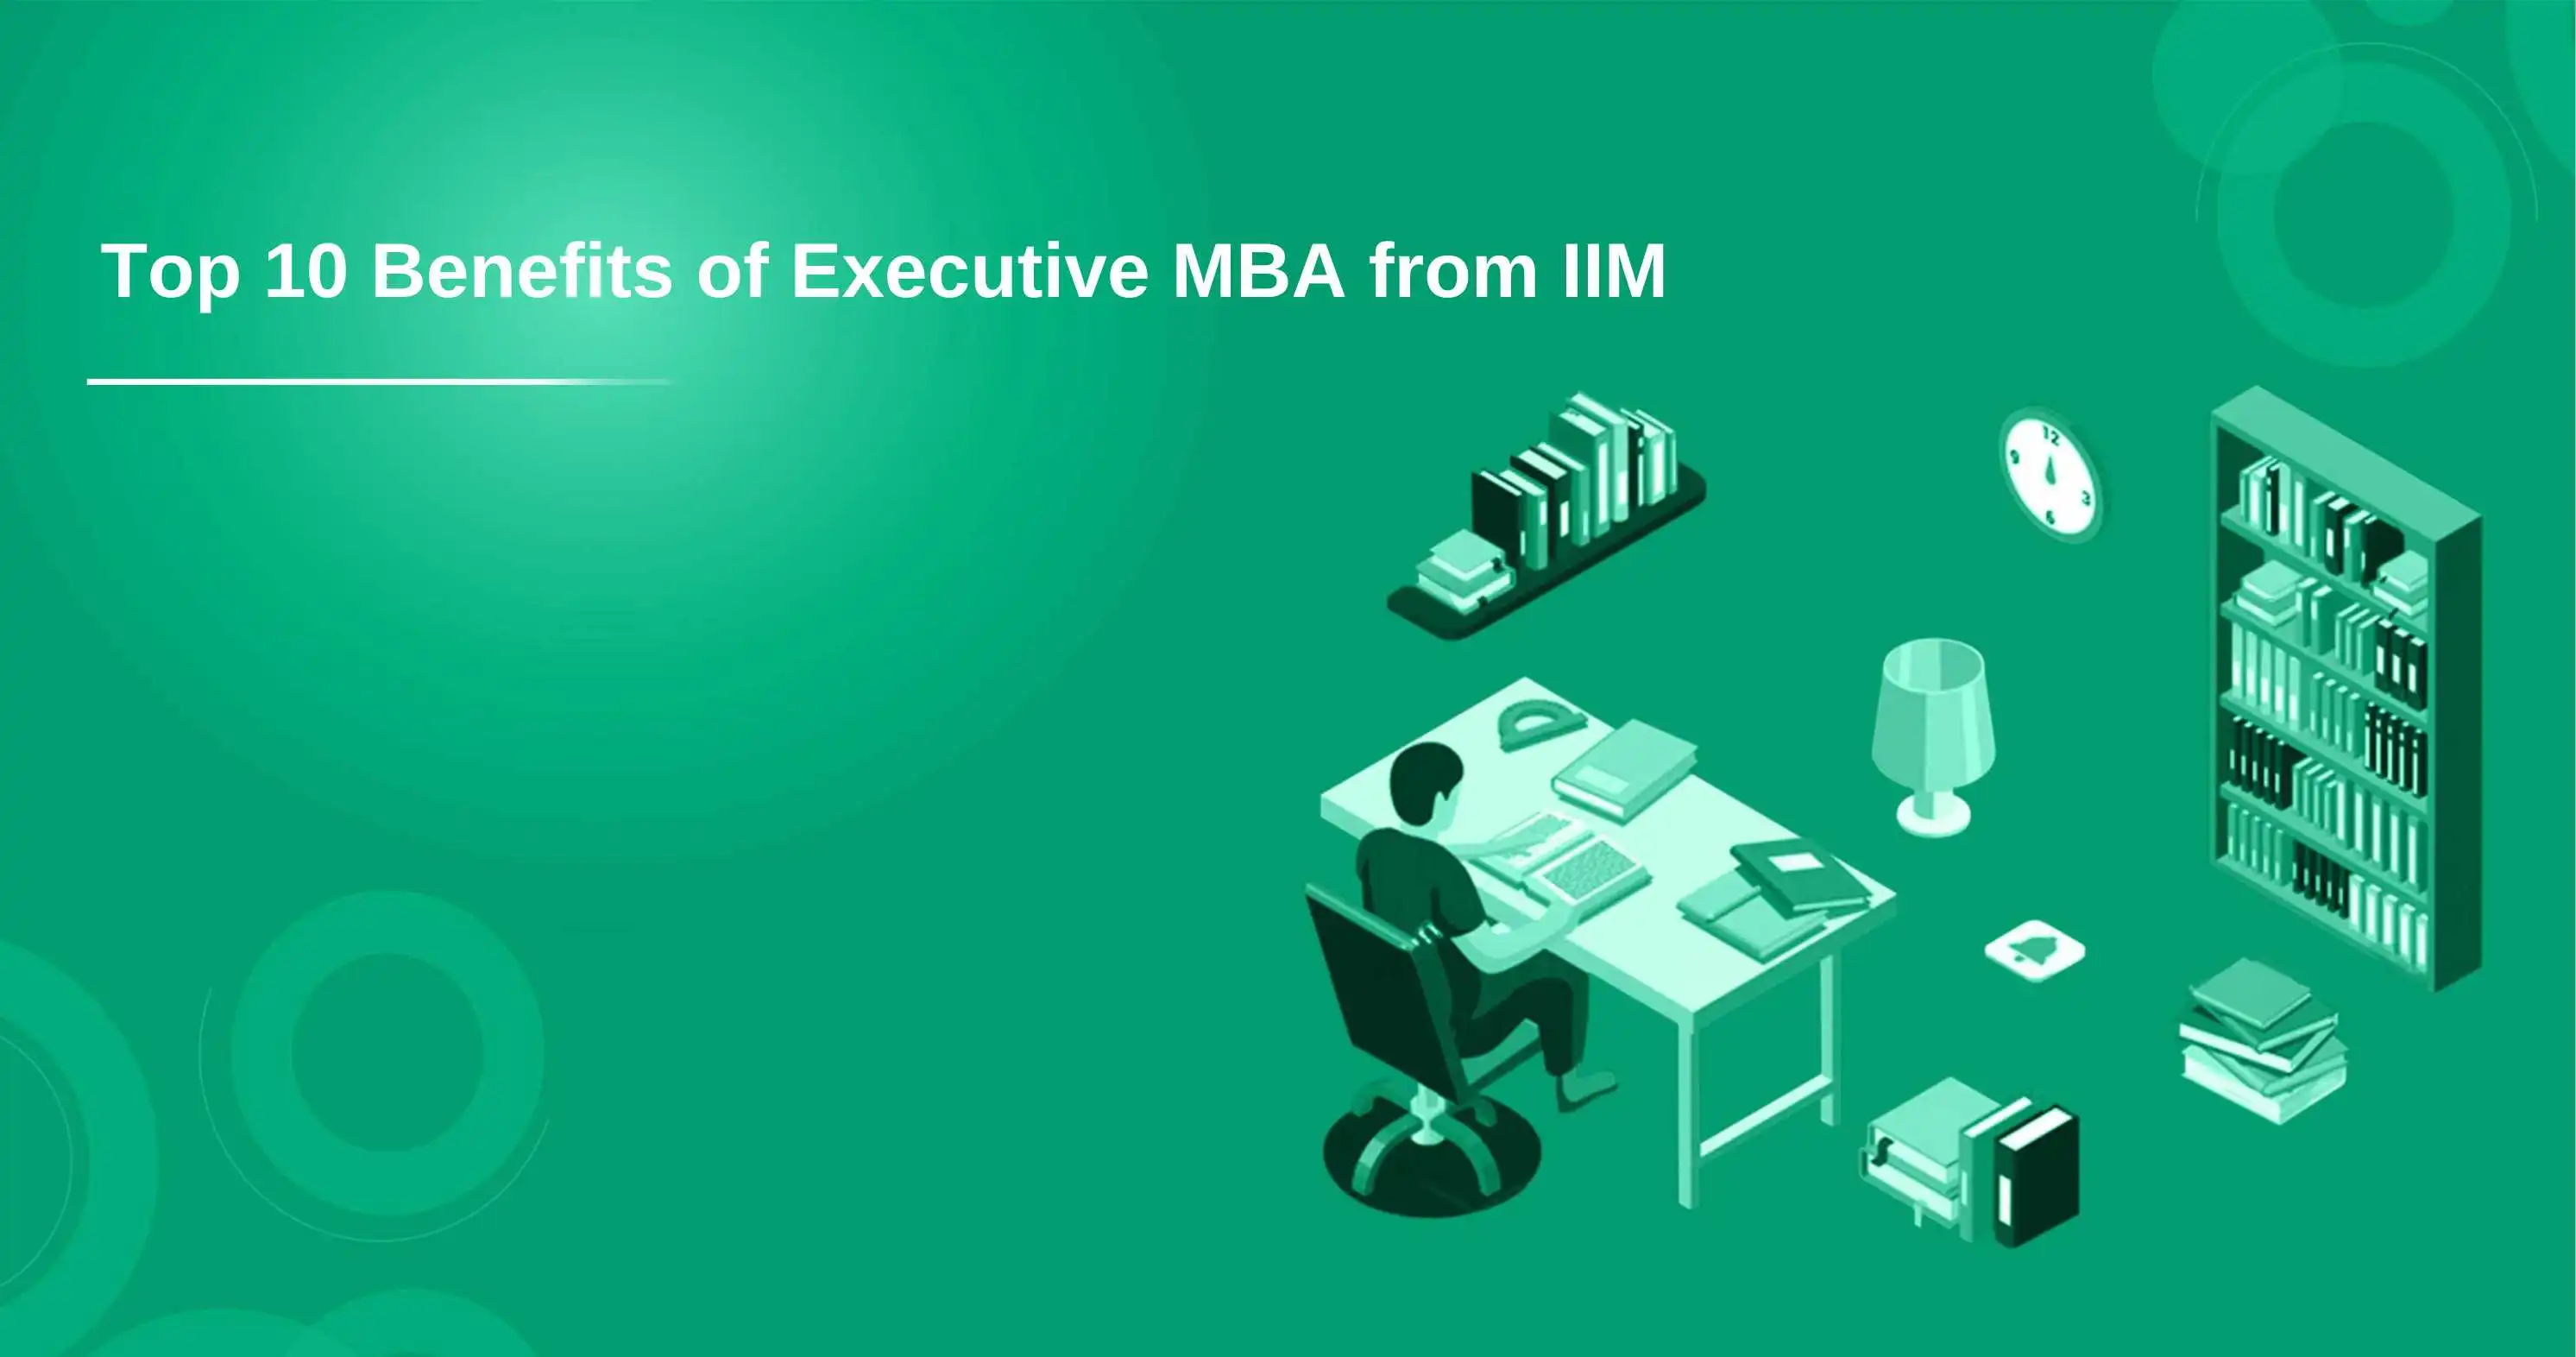 Top 10 Benefits of Executive MBA from IIM